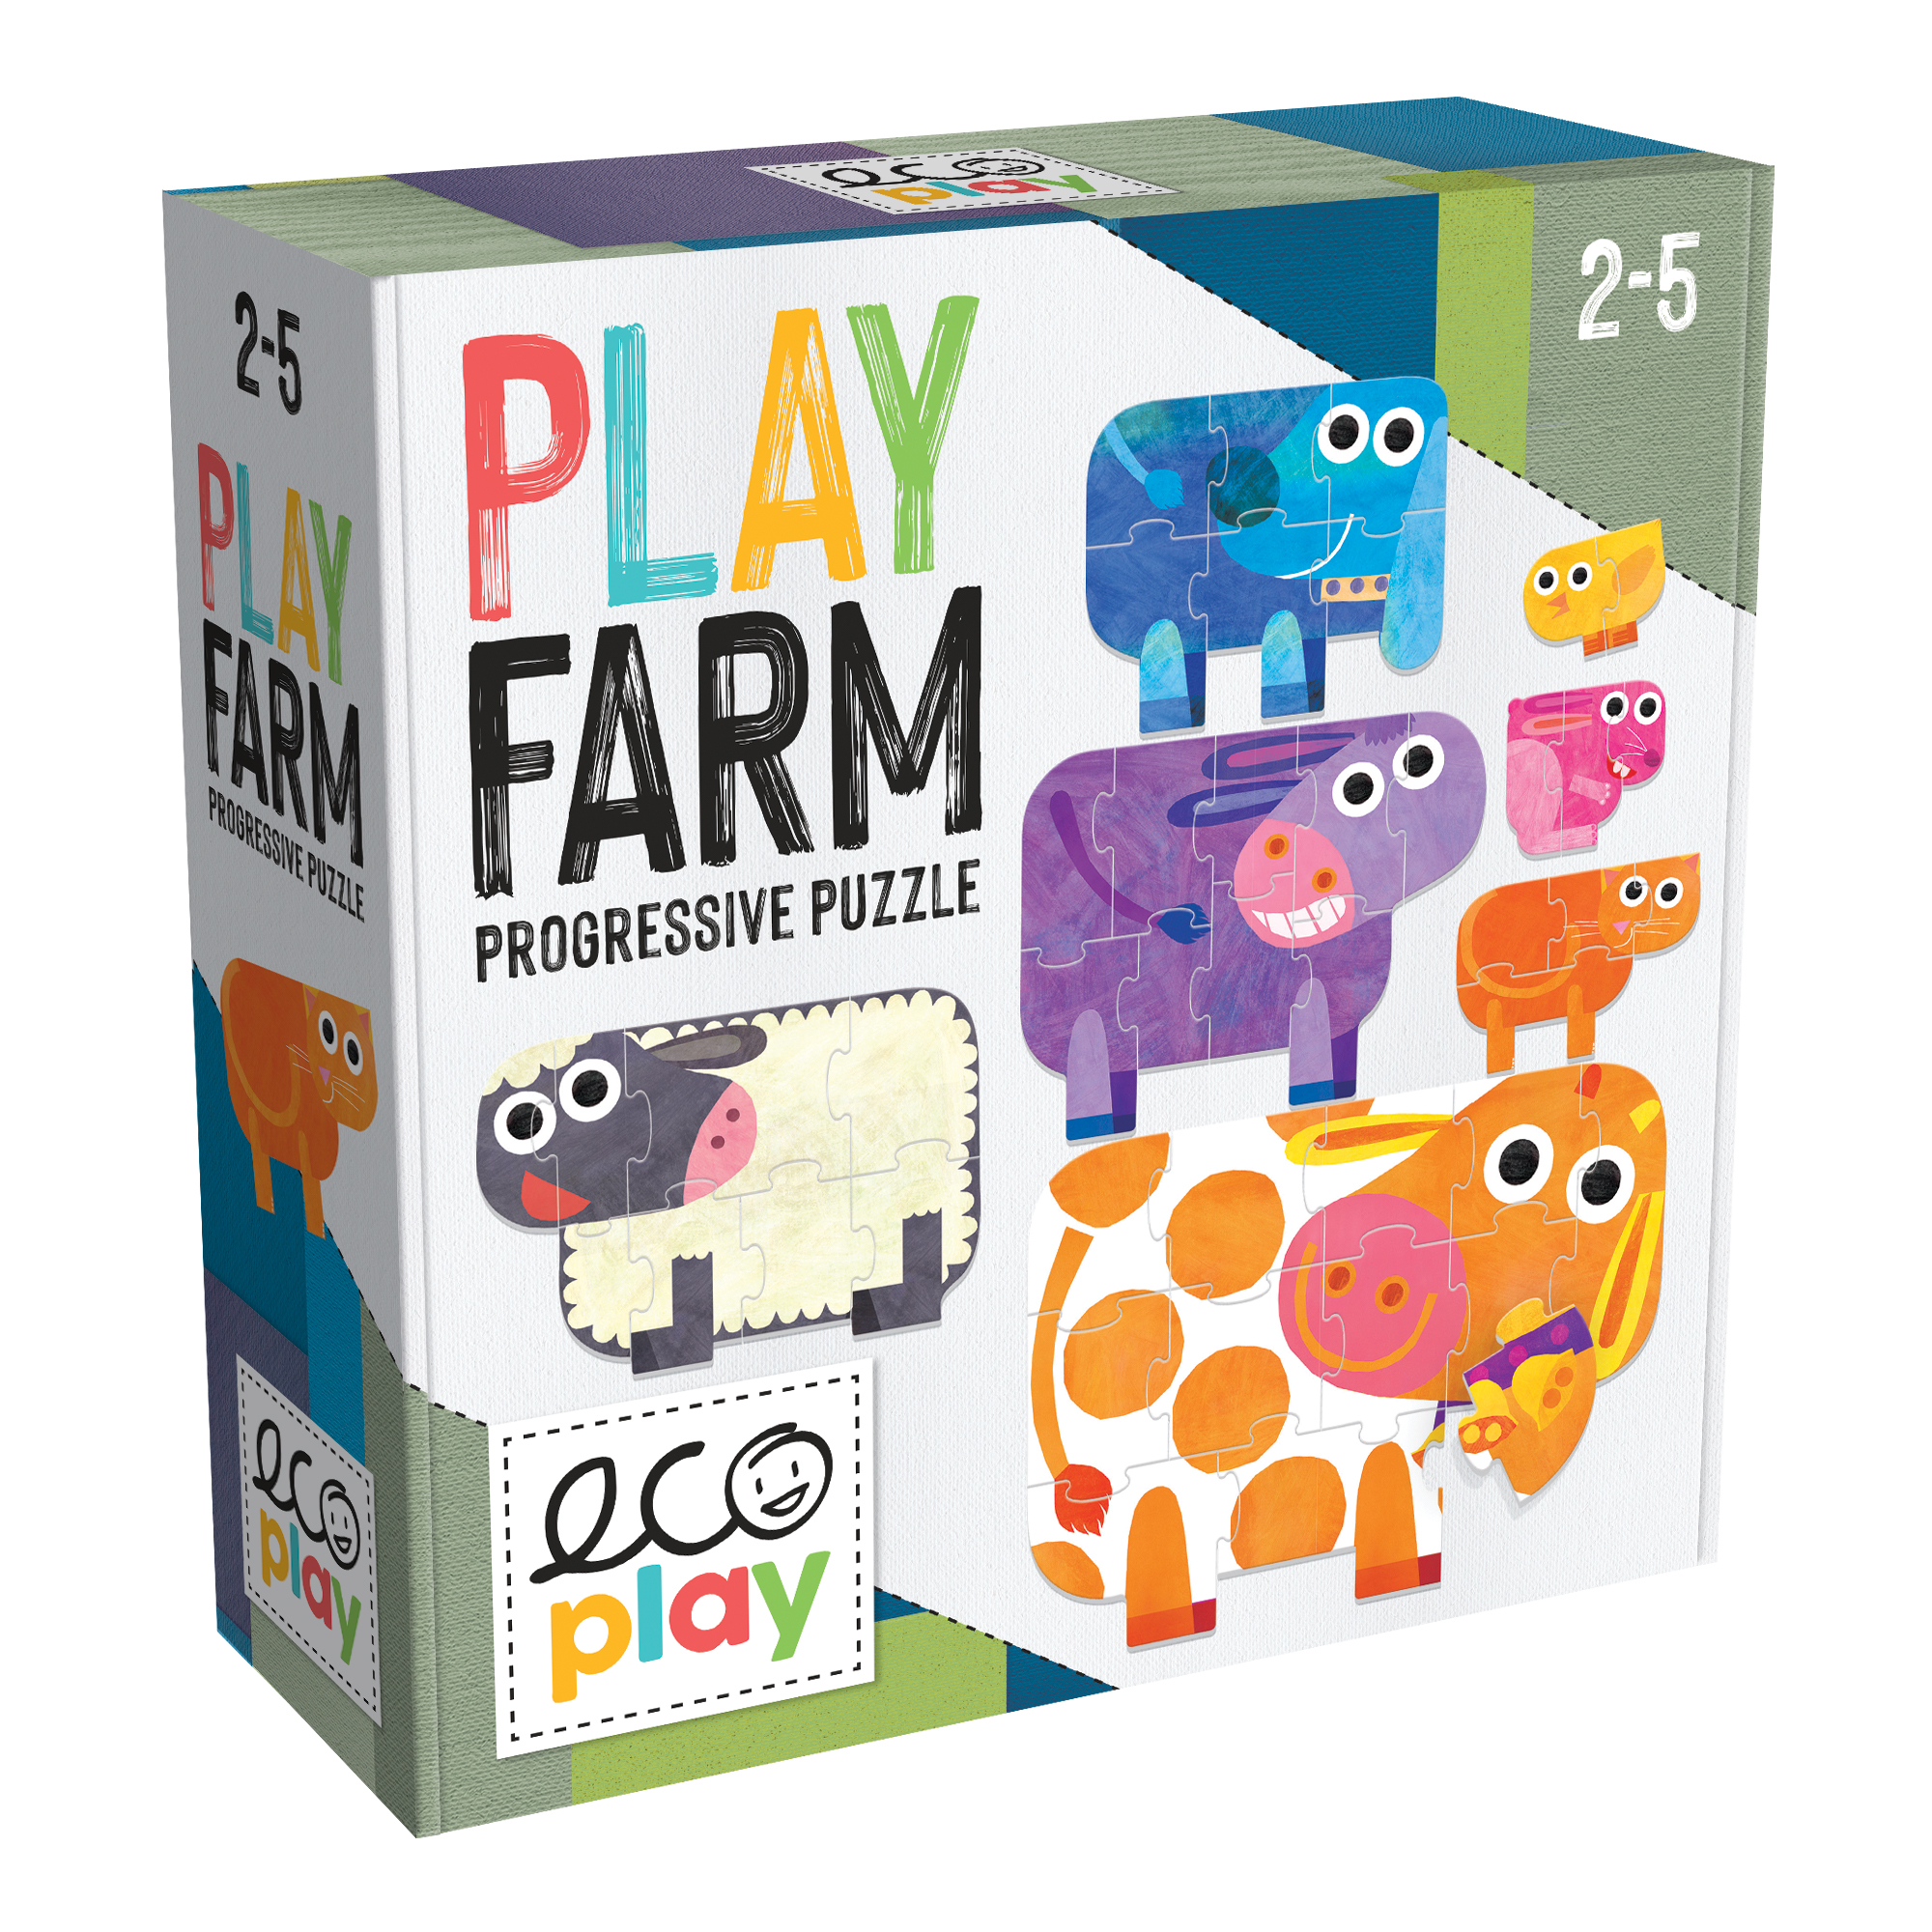 Ecoplay - play farm progressive puzzle - HEADU